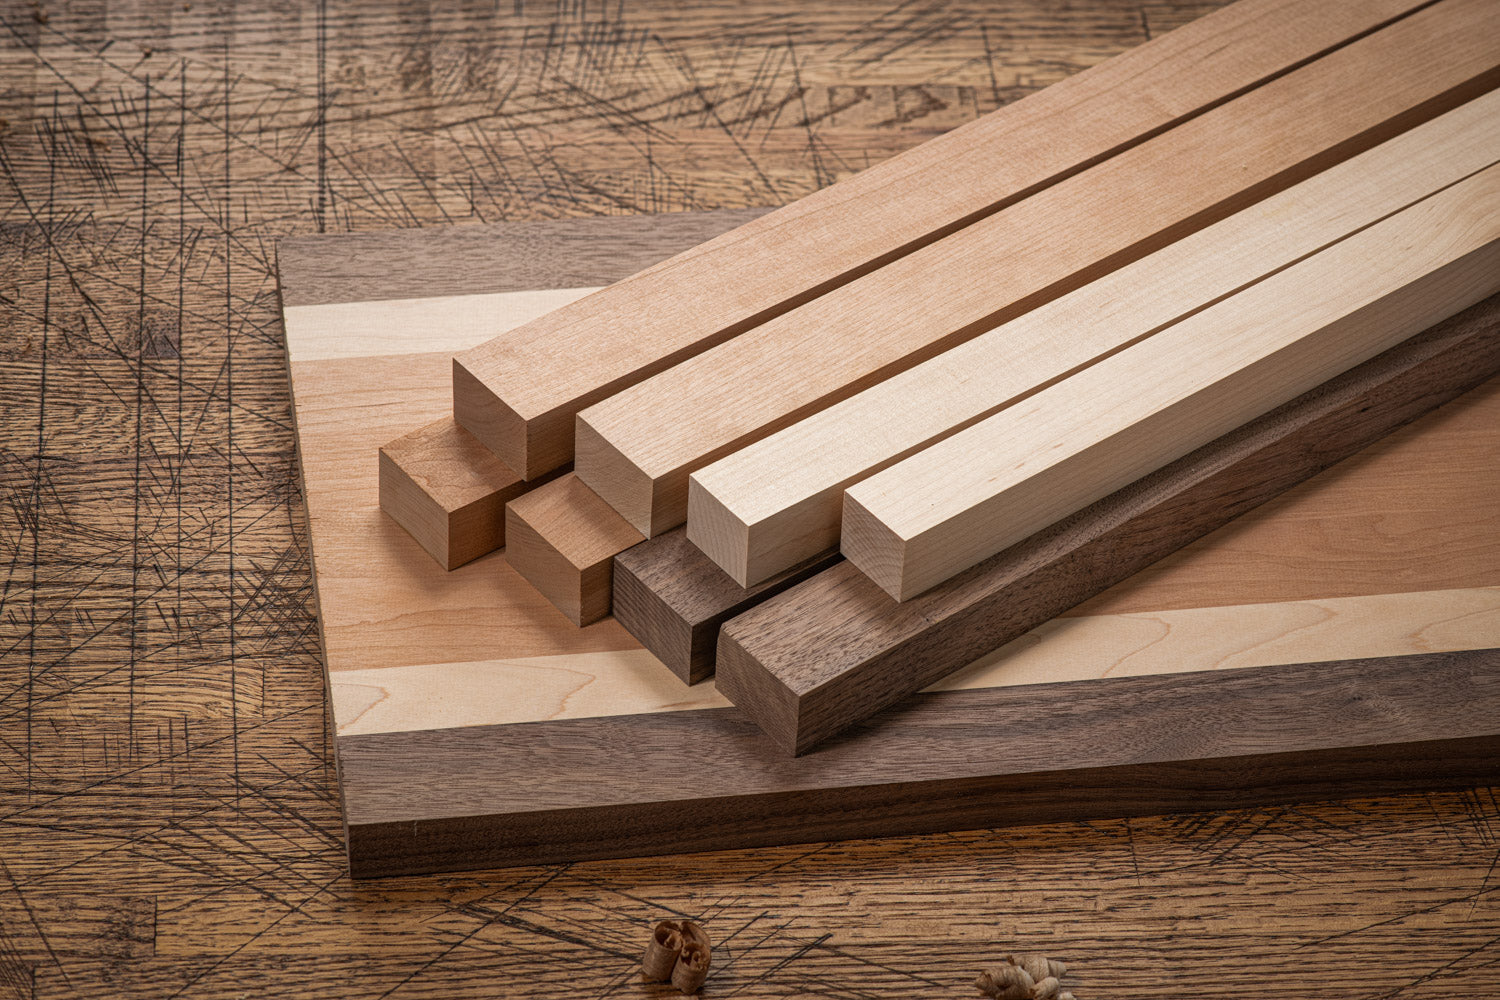 Kitsin Large Wood Cutting Board with Premium Edge Grain, Thick